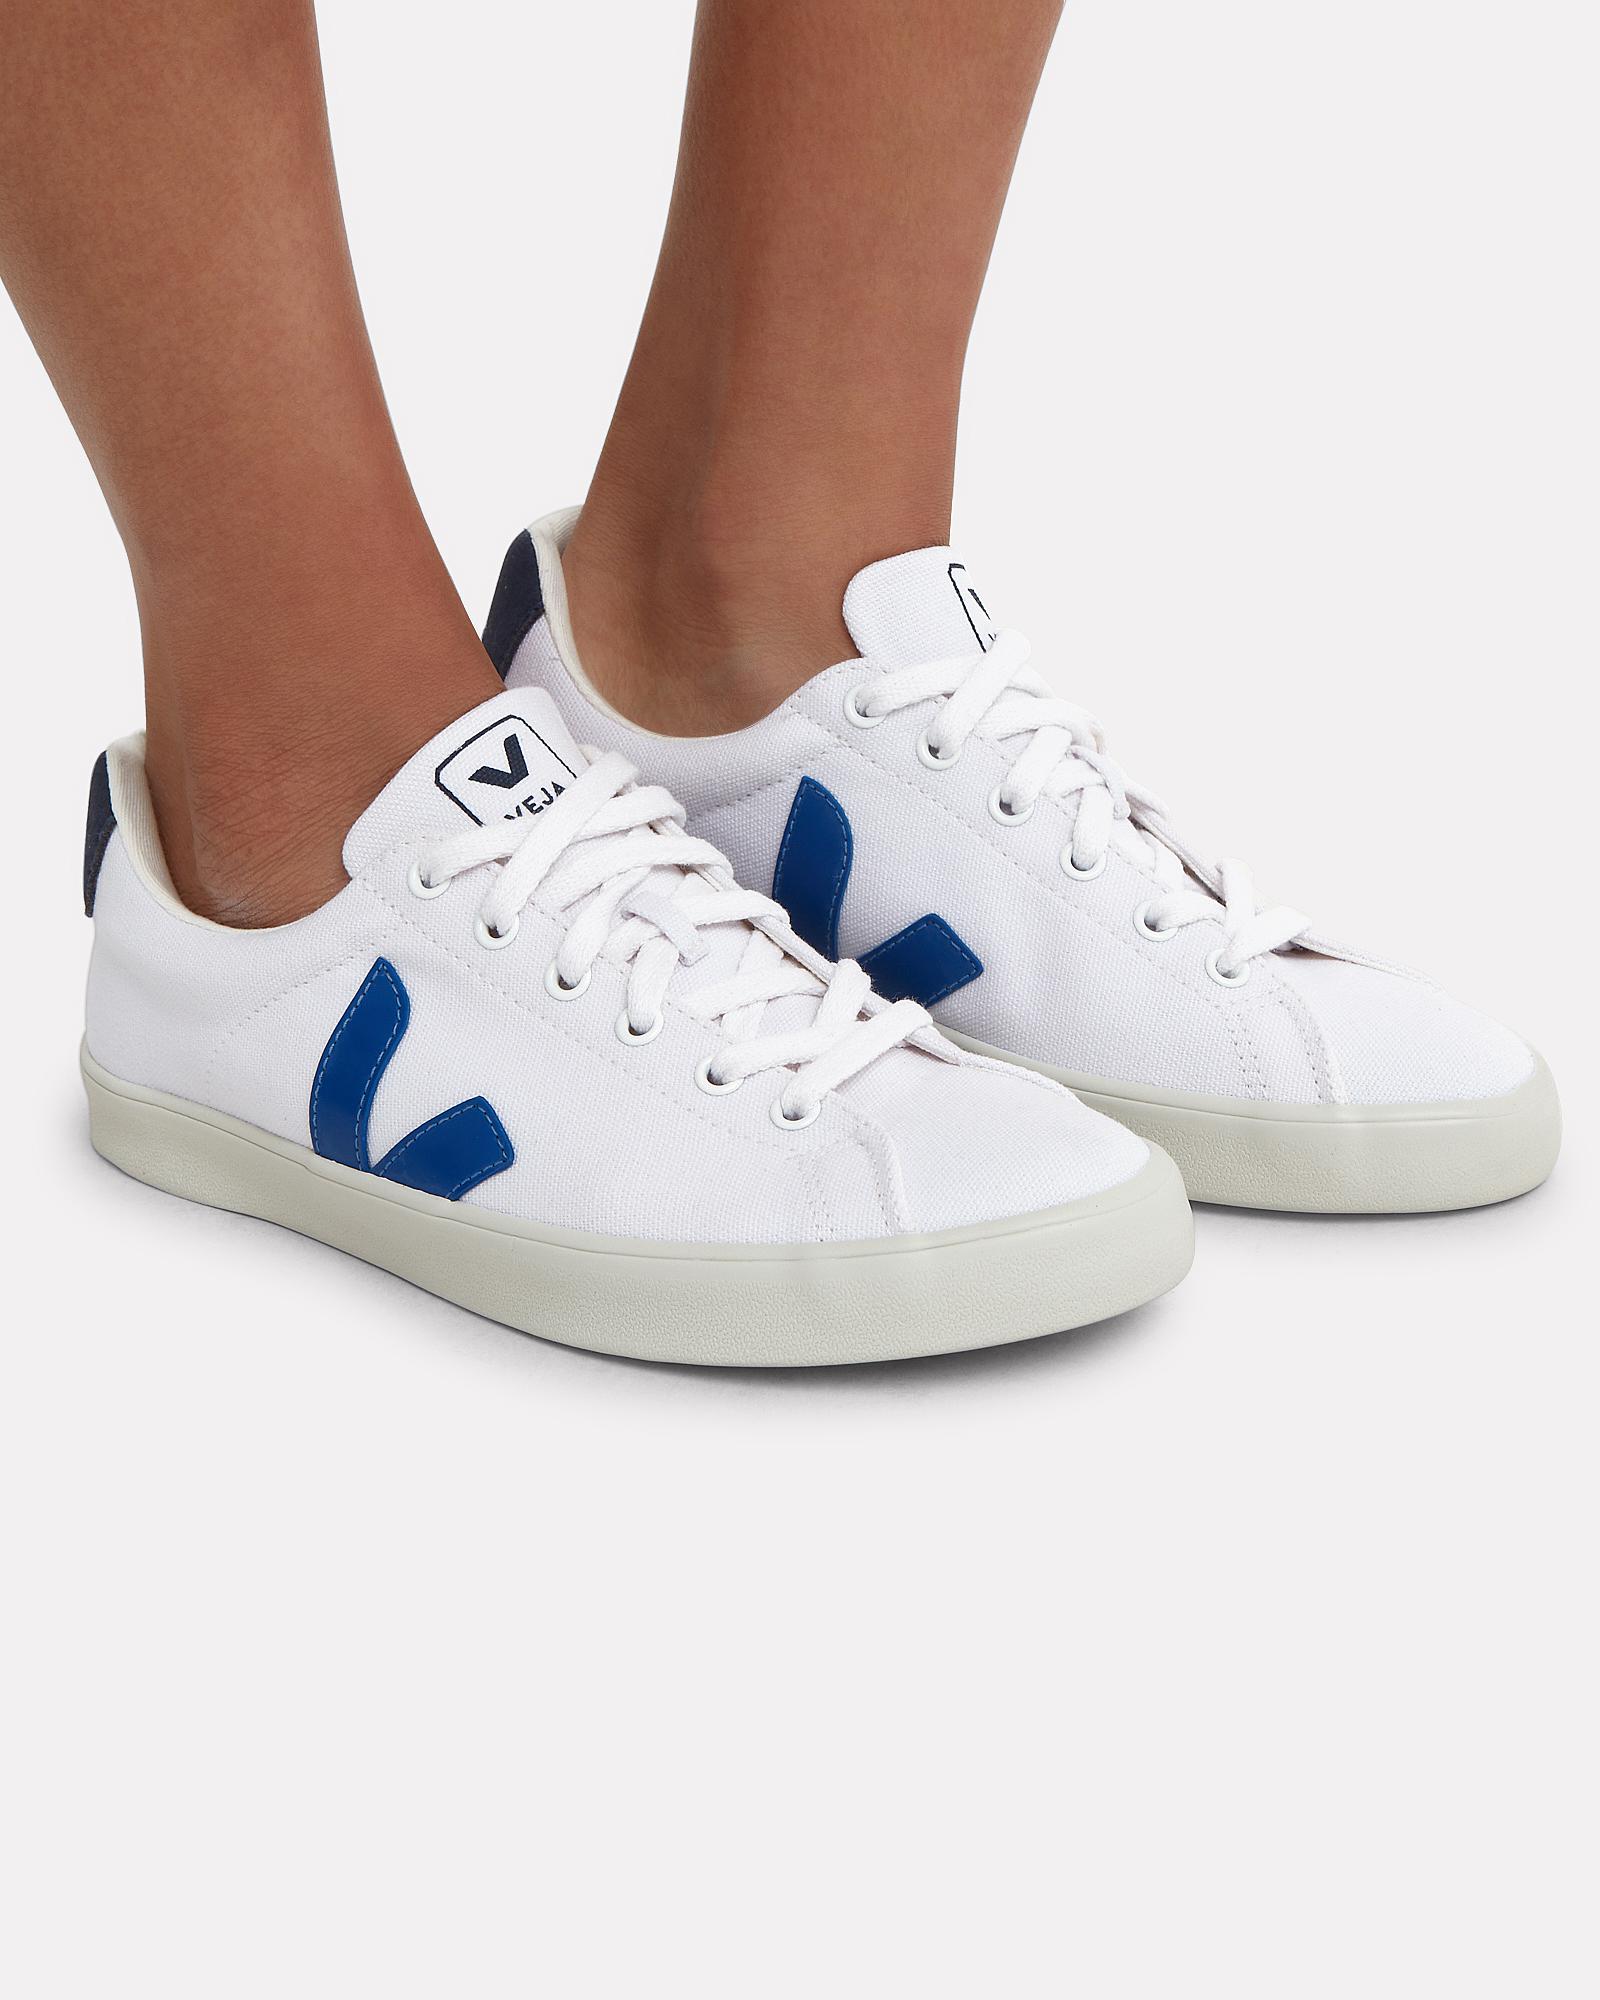 Veja Canvas Esplar Blue Low-top Sneakers | Lyst